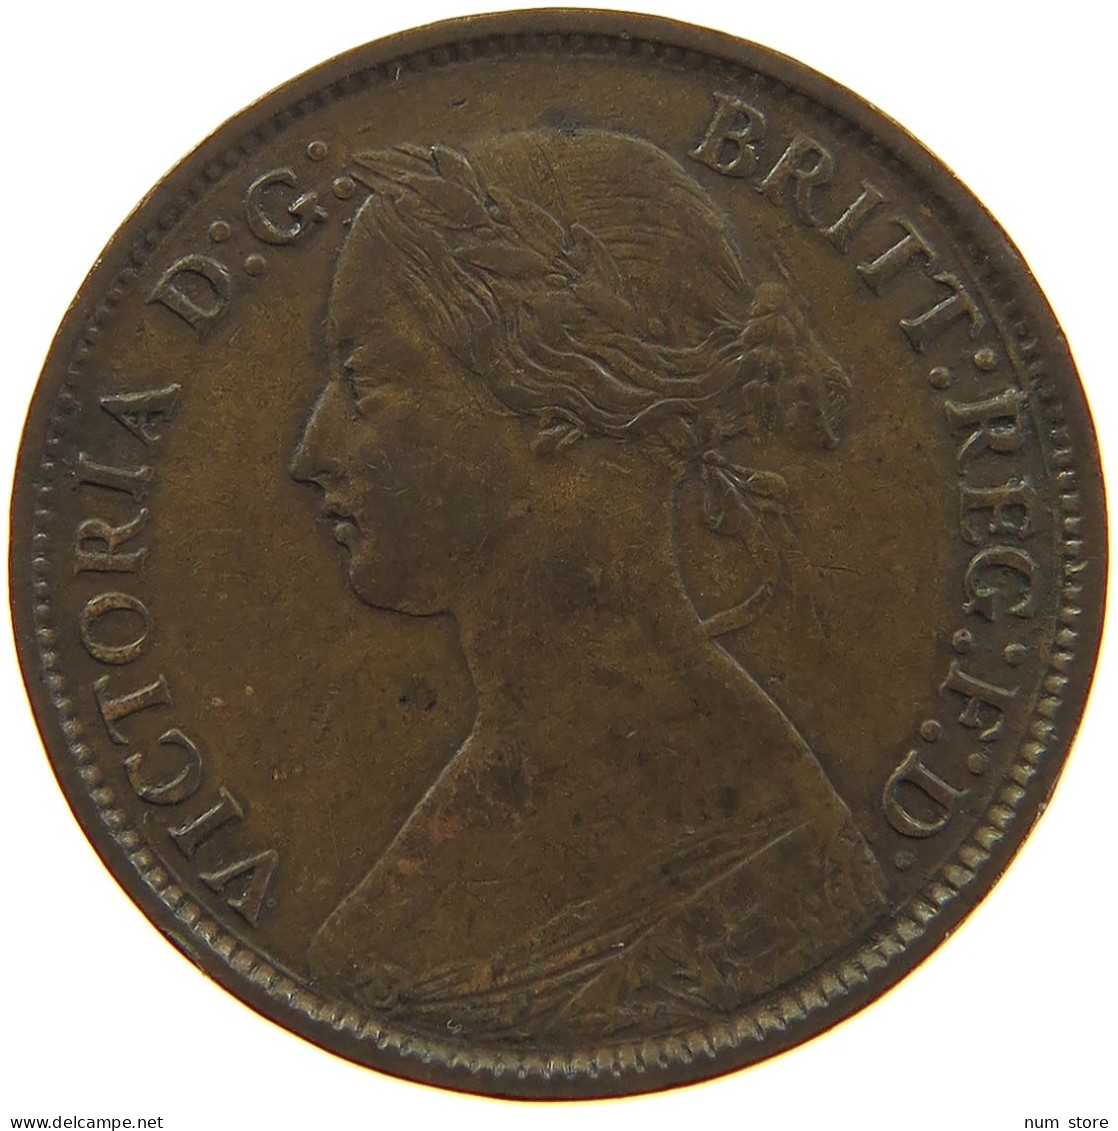 GREAT BRITAIN FARTHING 1861 Victoria 1837-1901 #s010 0219 - B. 1 Farthing